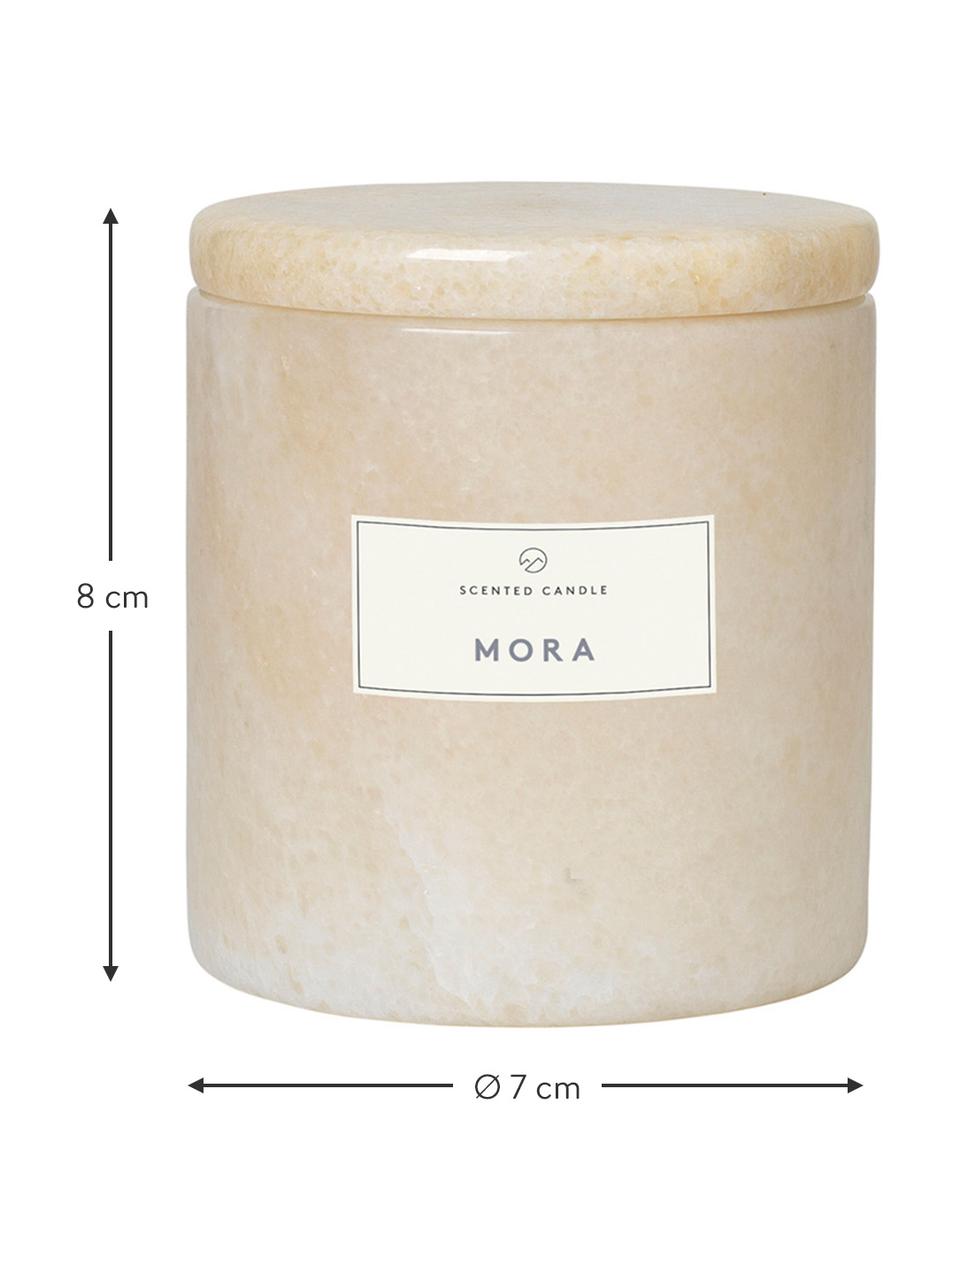 Bougie parfumée Mora (vanille, lavande, myrrhe), Vanille, lavande, myrrhe, Ø 7 x haut. 8 cm